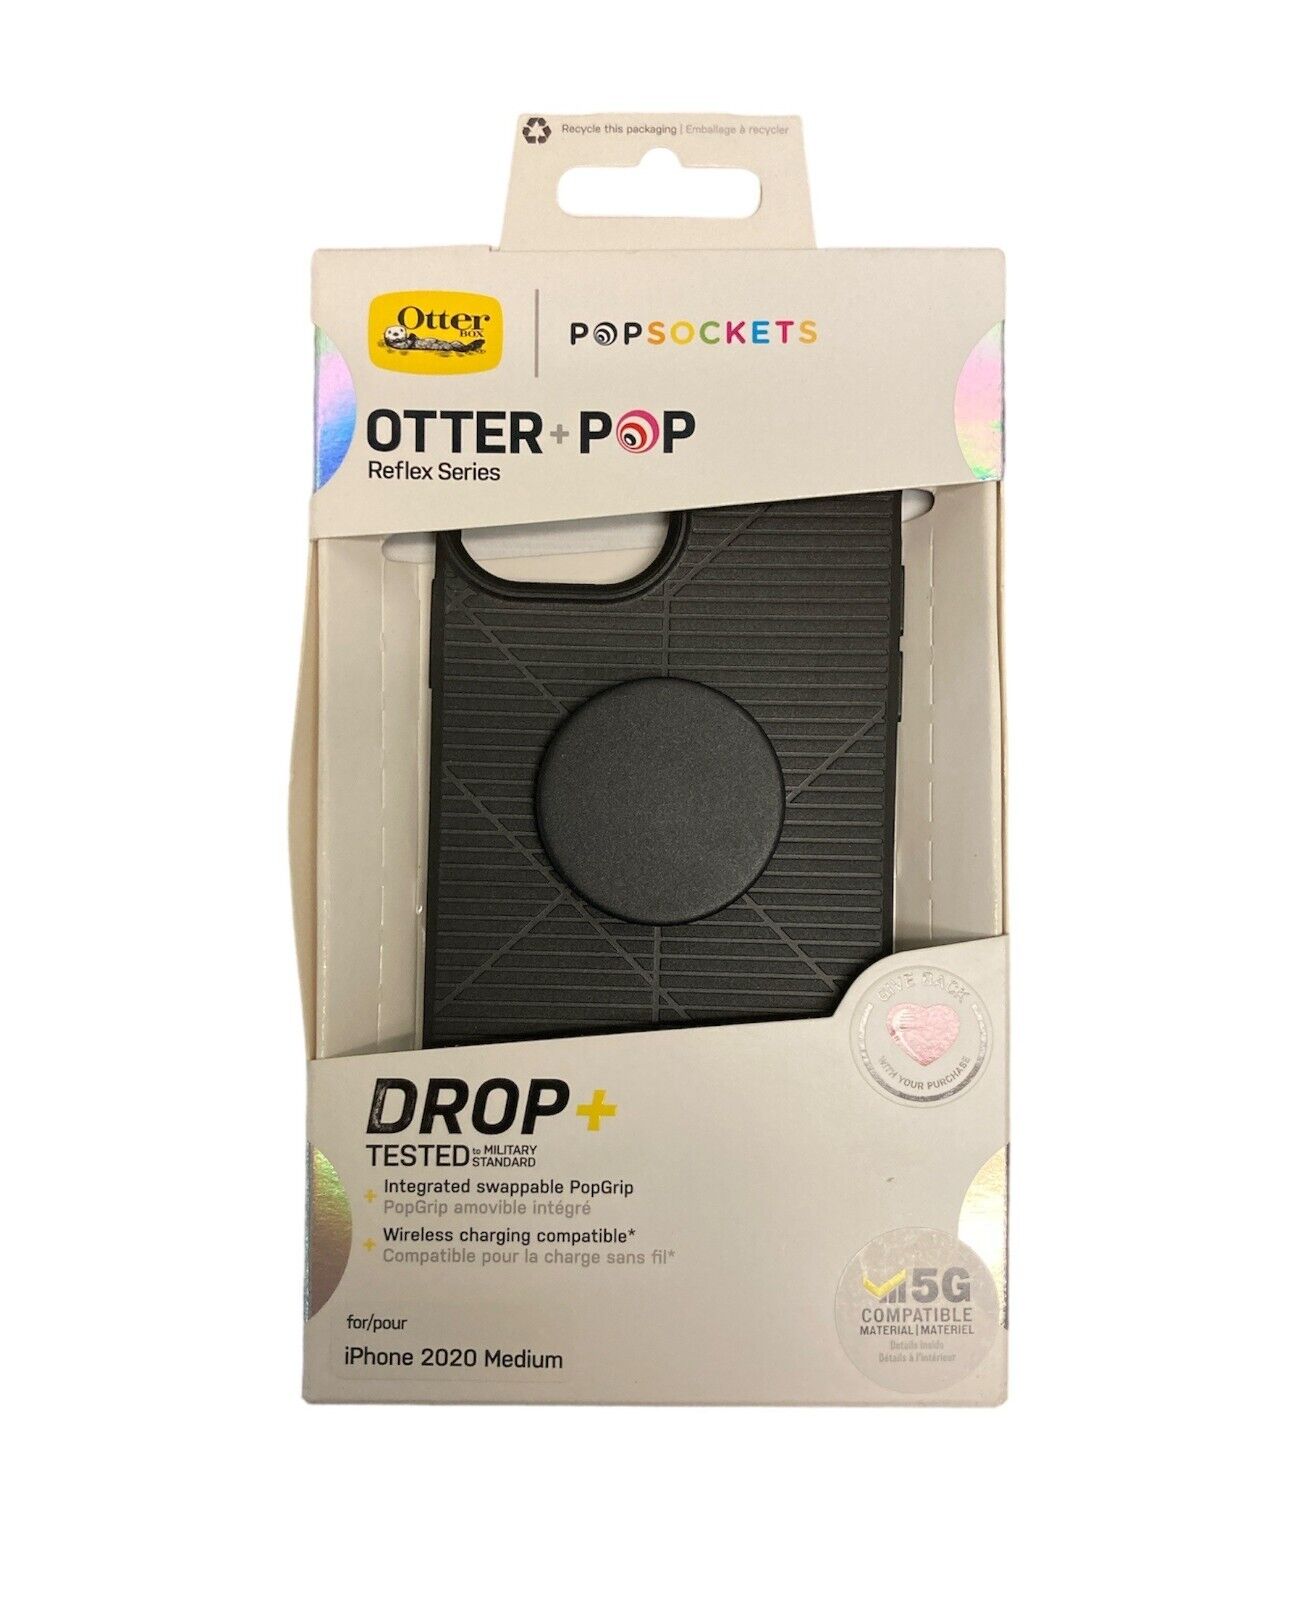 Otterbox Otter + Pop Reflex Series Case for Apple iPhone 12/2020 Medium, Black